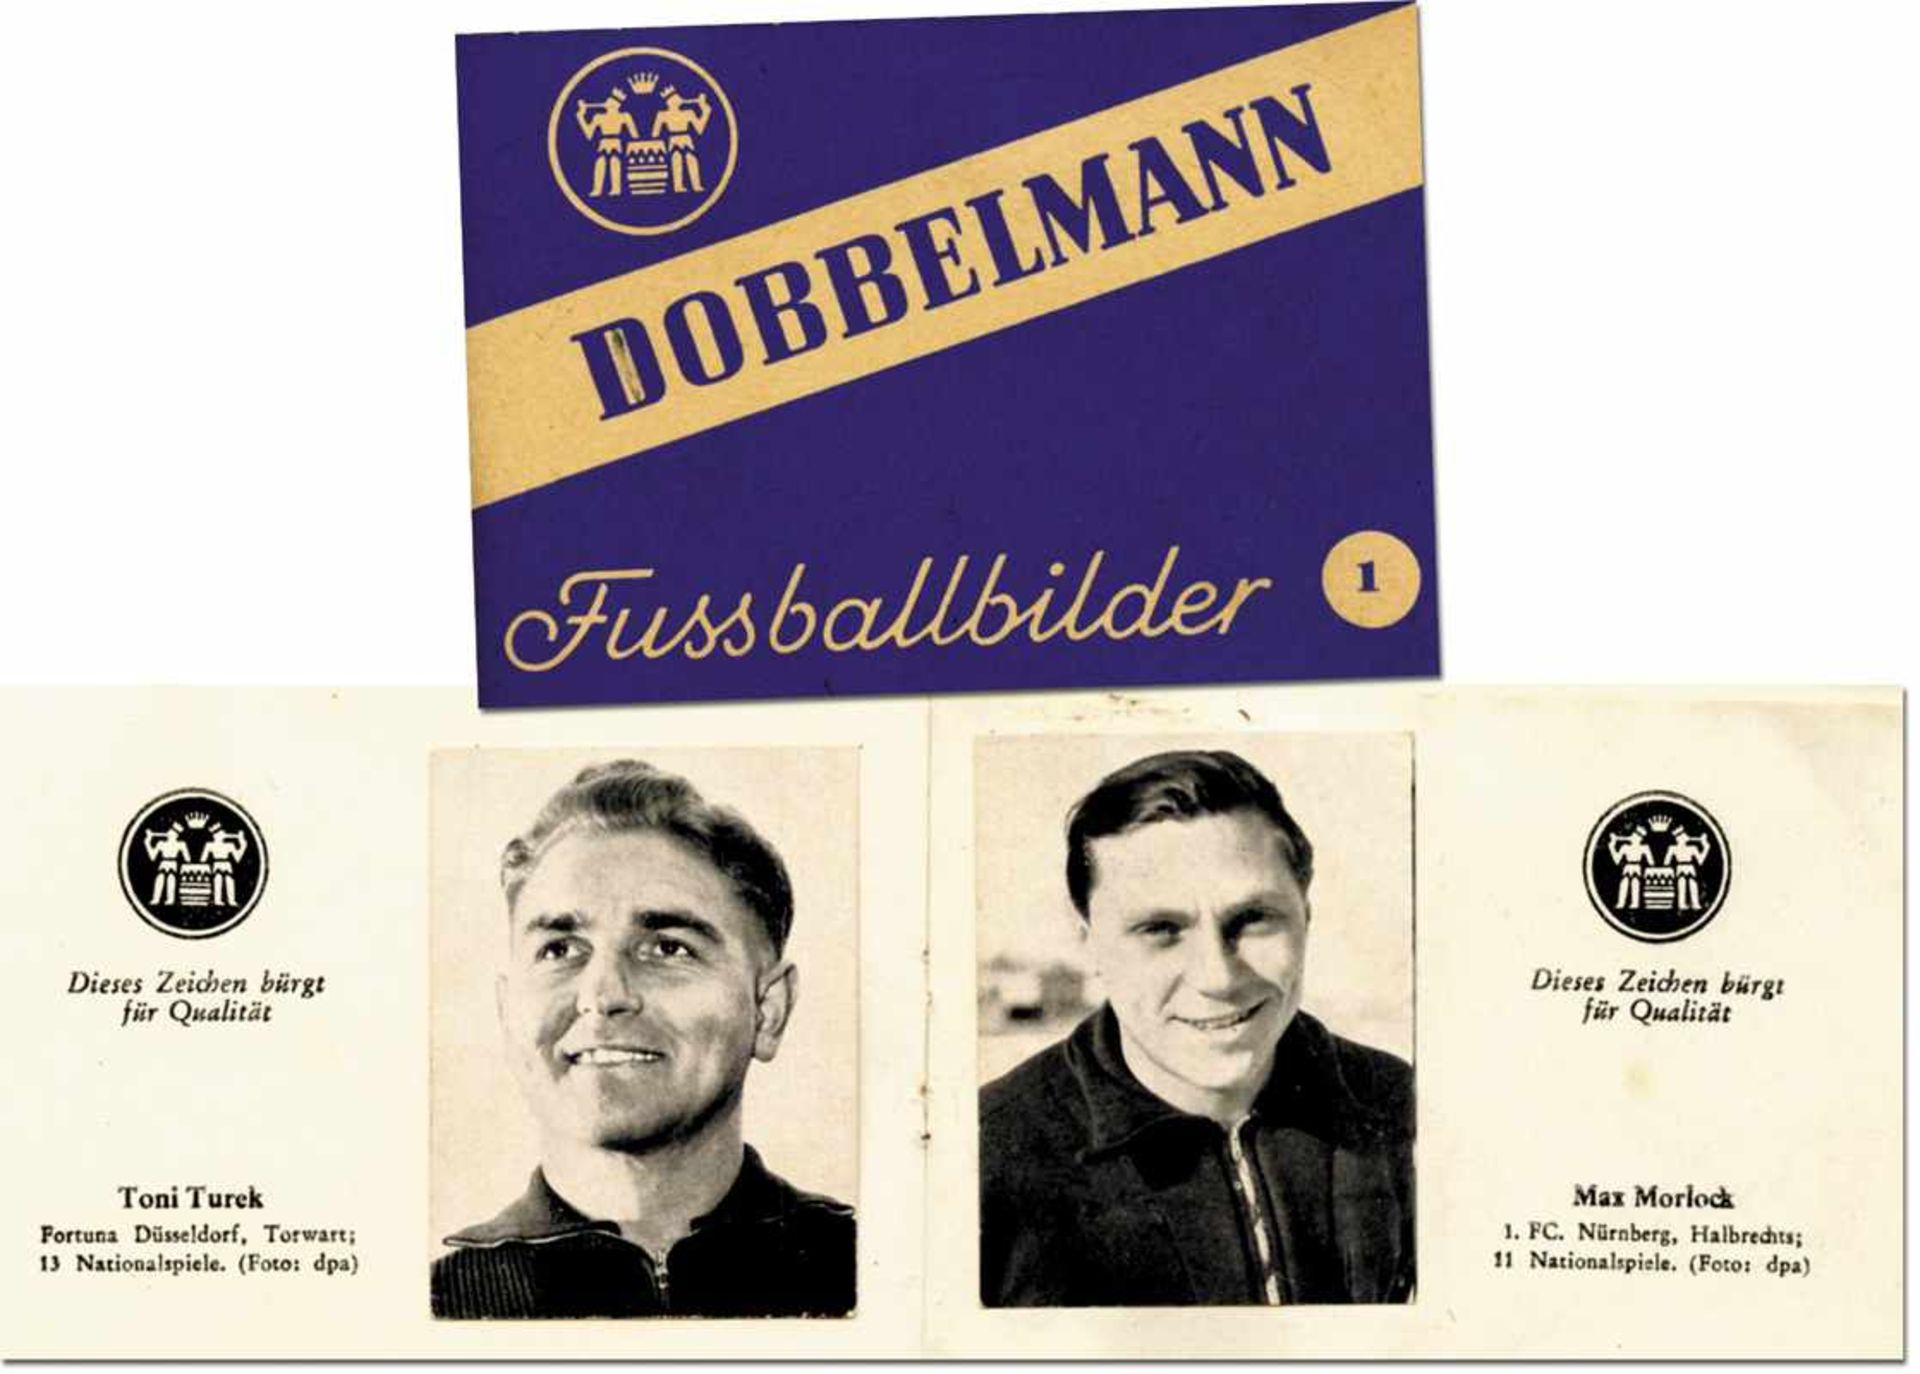 German Sticker Album 1958 Dobbelmann - One of the rarest German colletorcards album of the World Cup